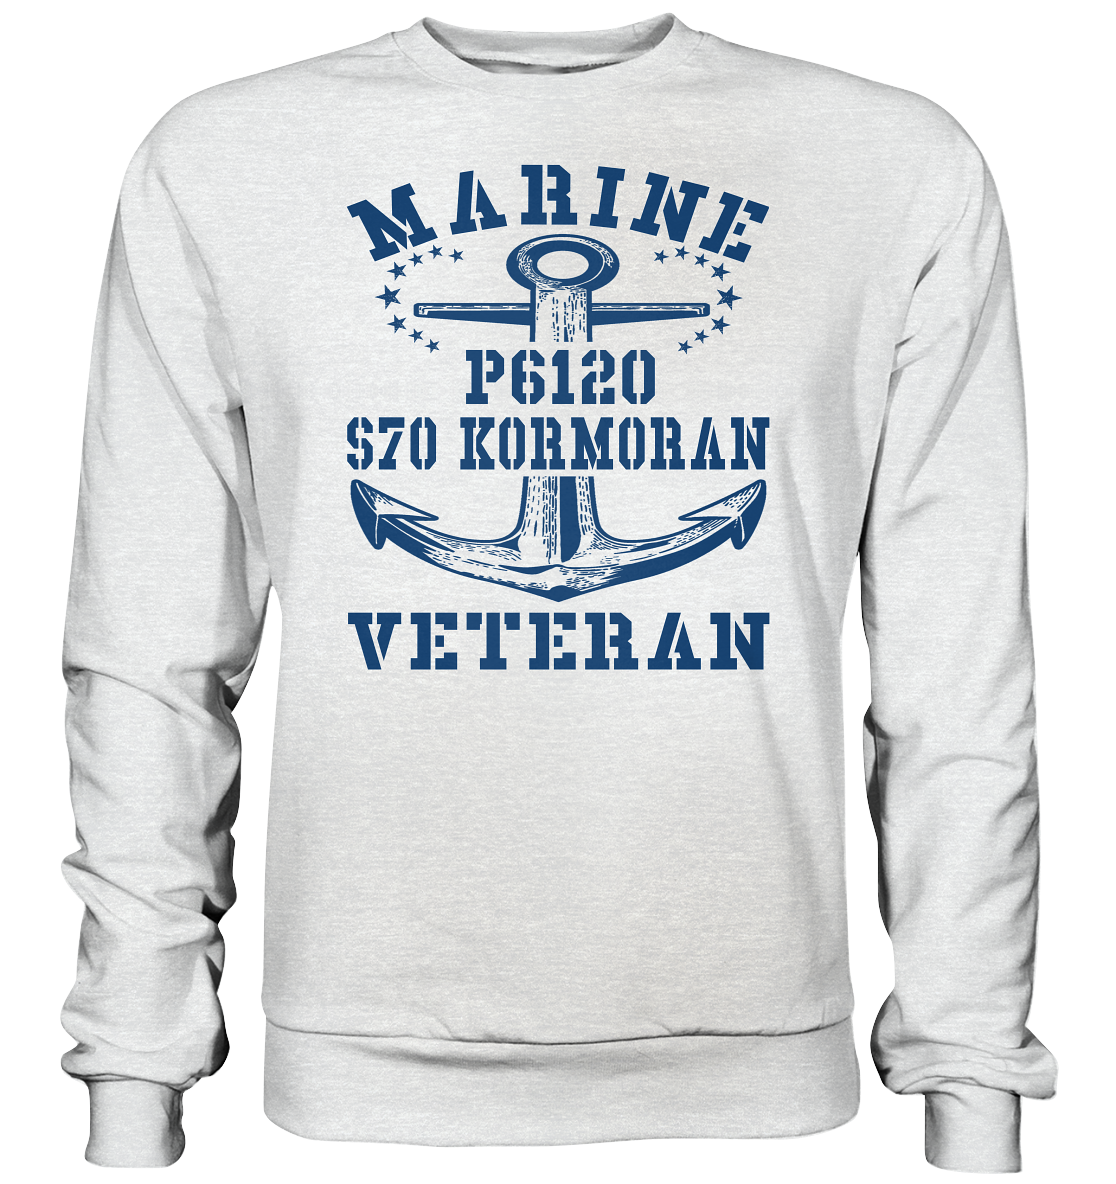 FK-Schnellboot P6120 KORMORAN Marine Veteran  - Premium Sweatshirt